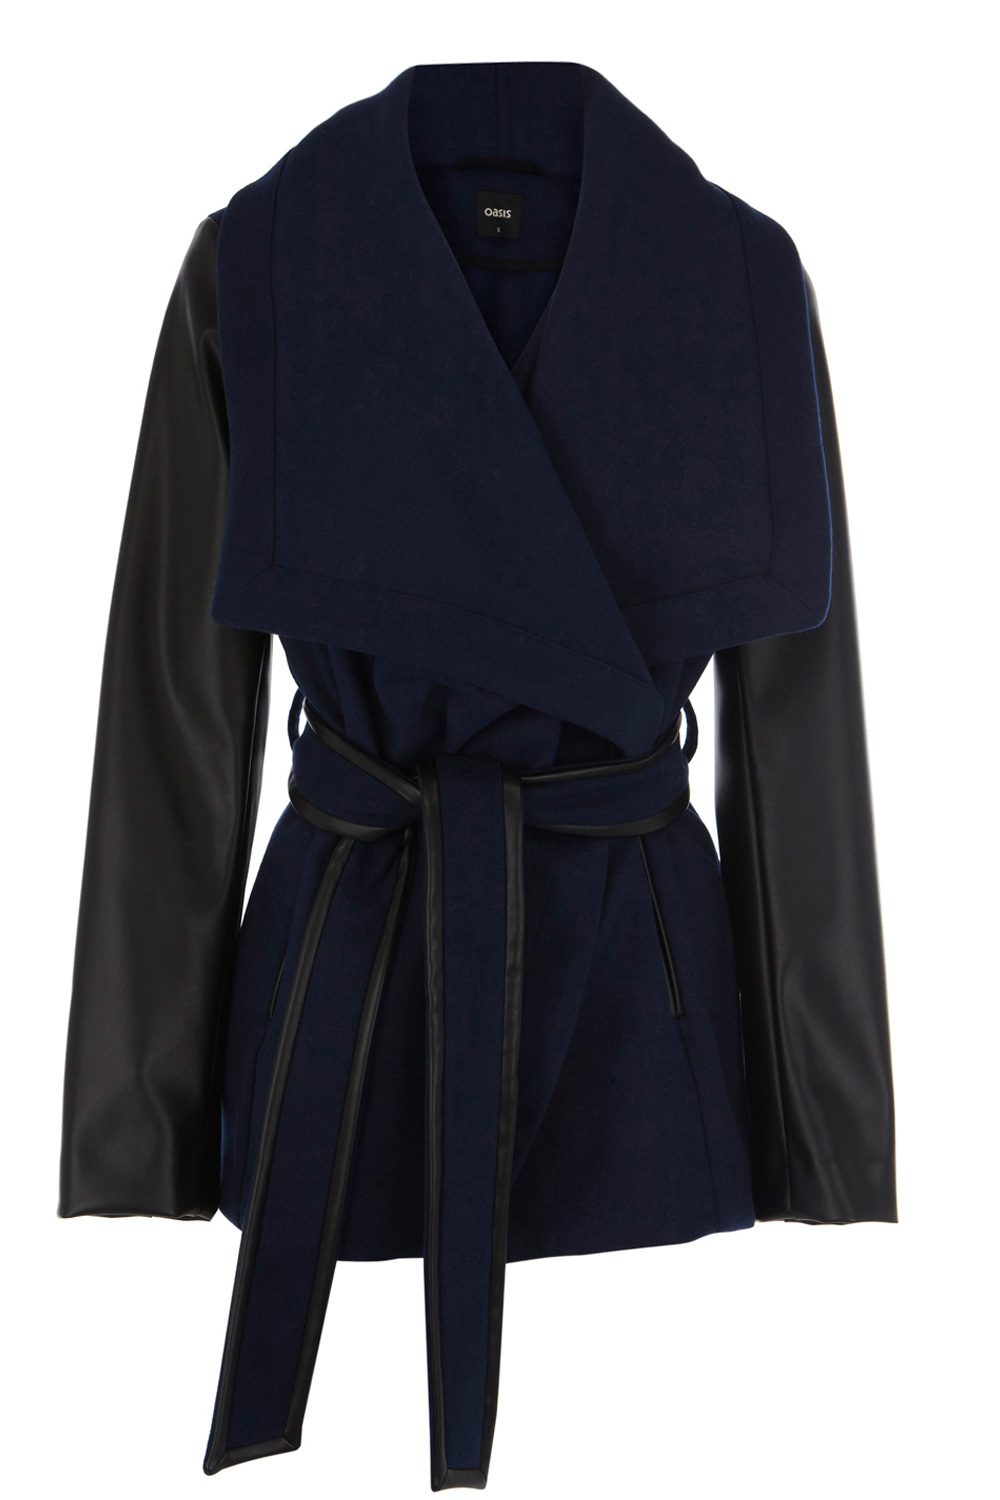 Coats - Beautifully Snug and Stylish Womens Coats | Oasis - ClipArt ...